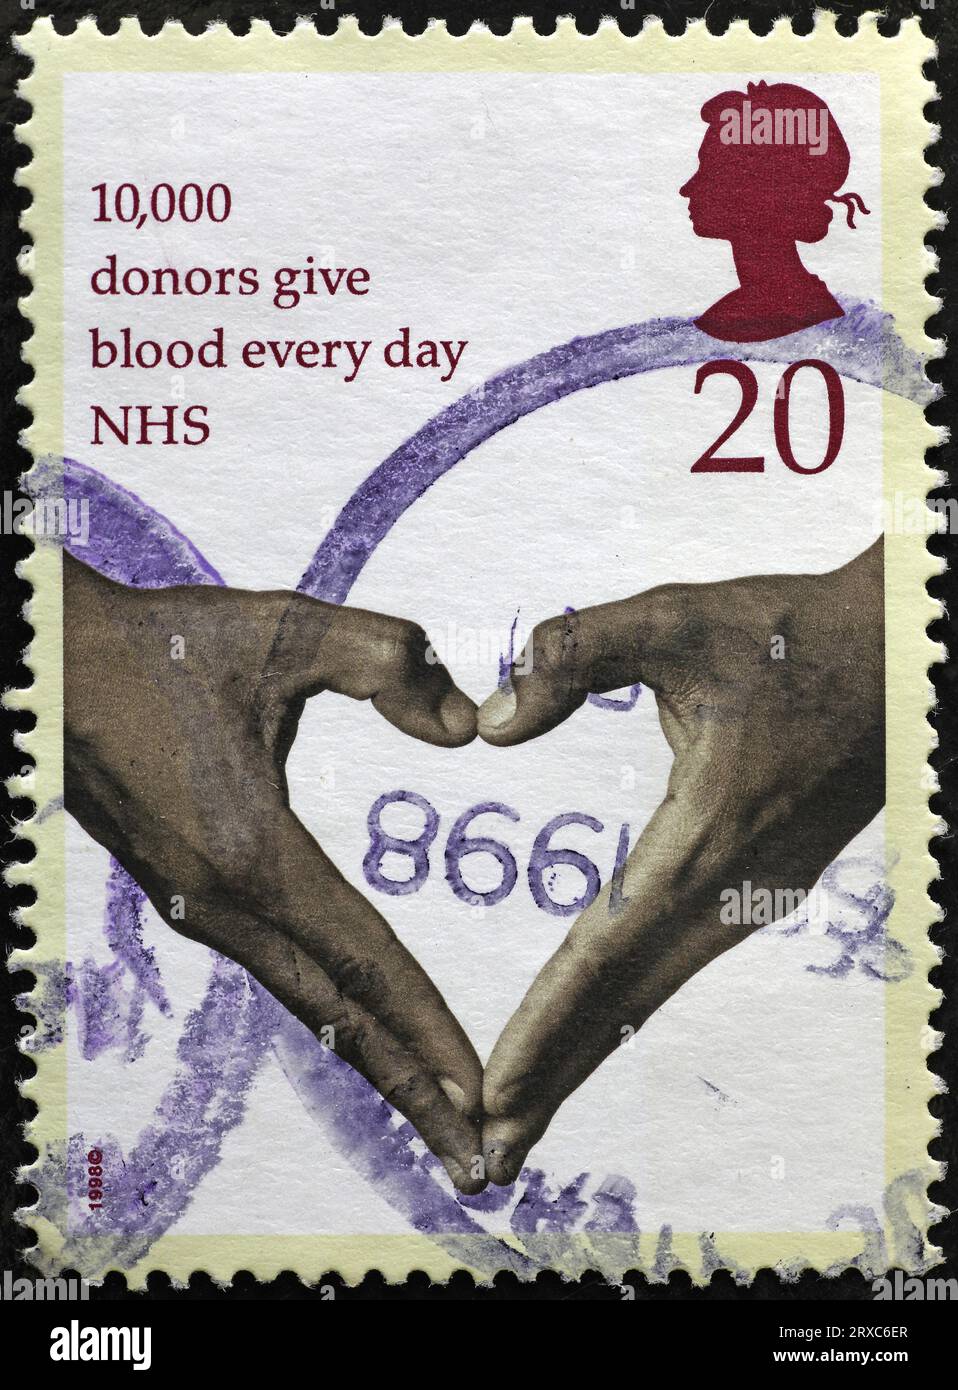 Blood donation celebrated on british postage stamp Stock Photo